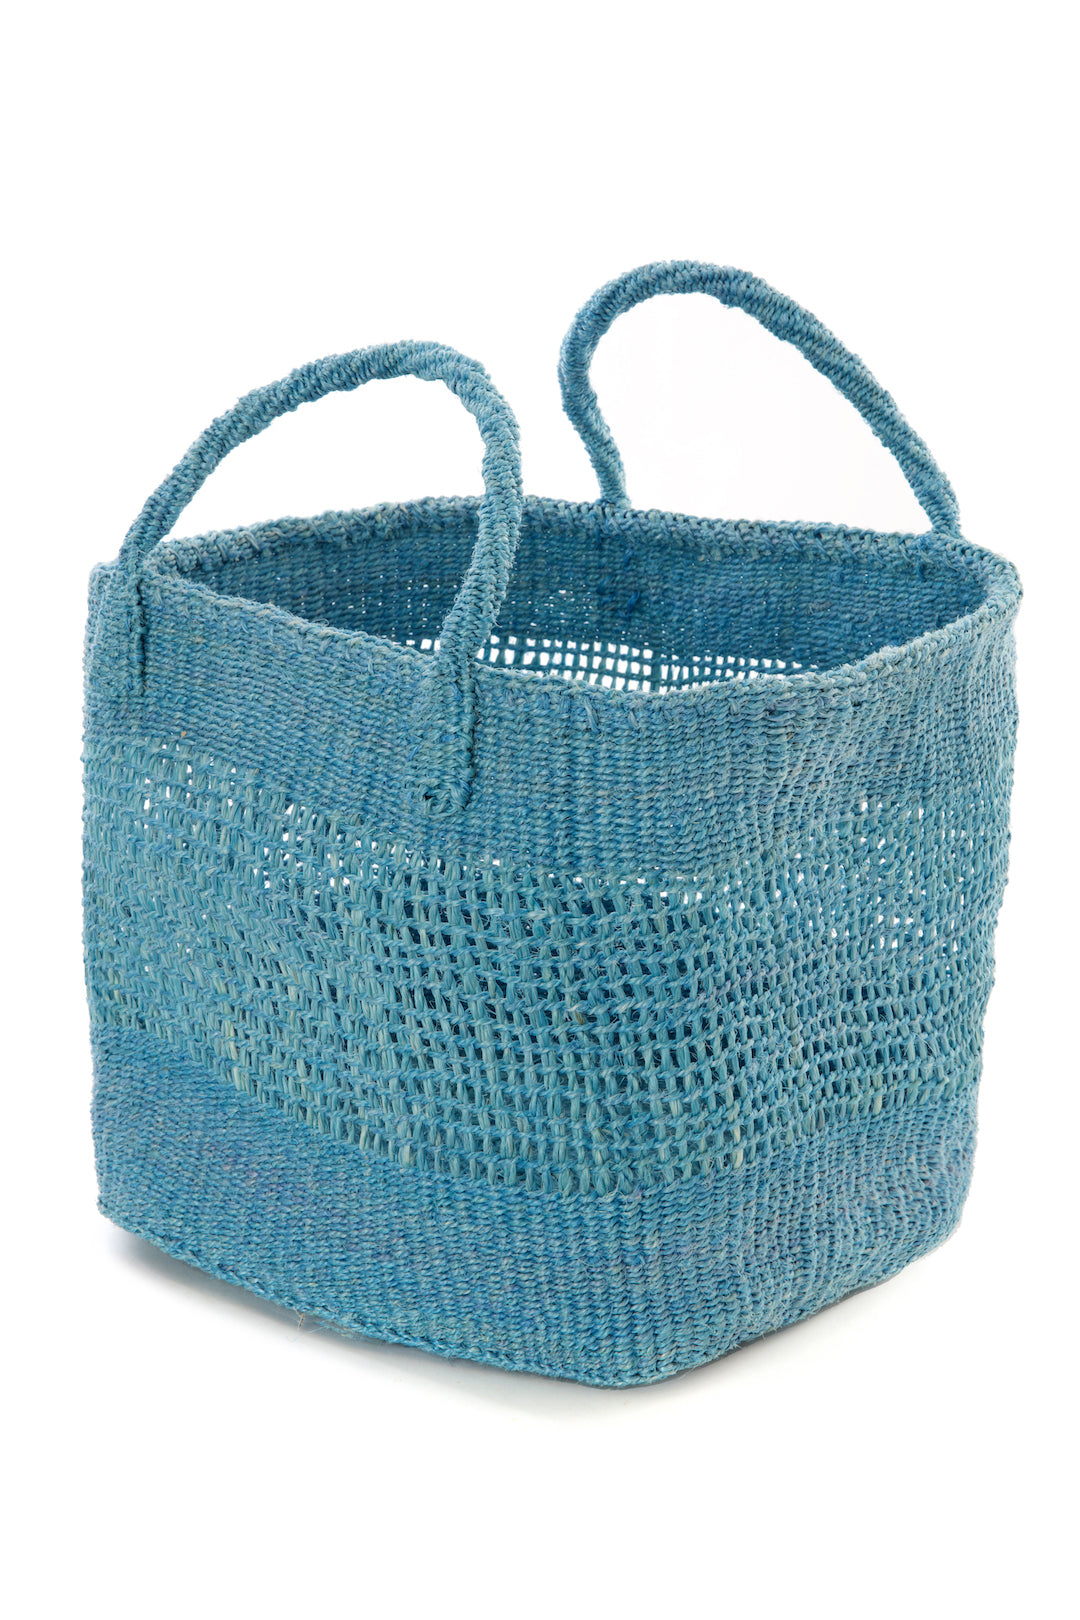 Set of 3 Open Weave Blue Sisal Nesting Baskets